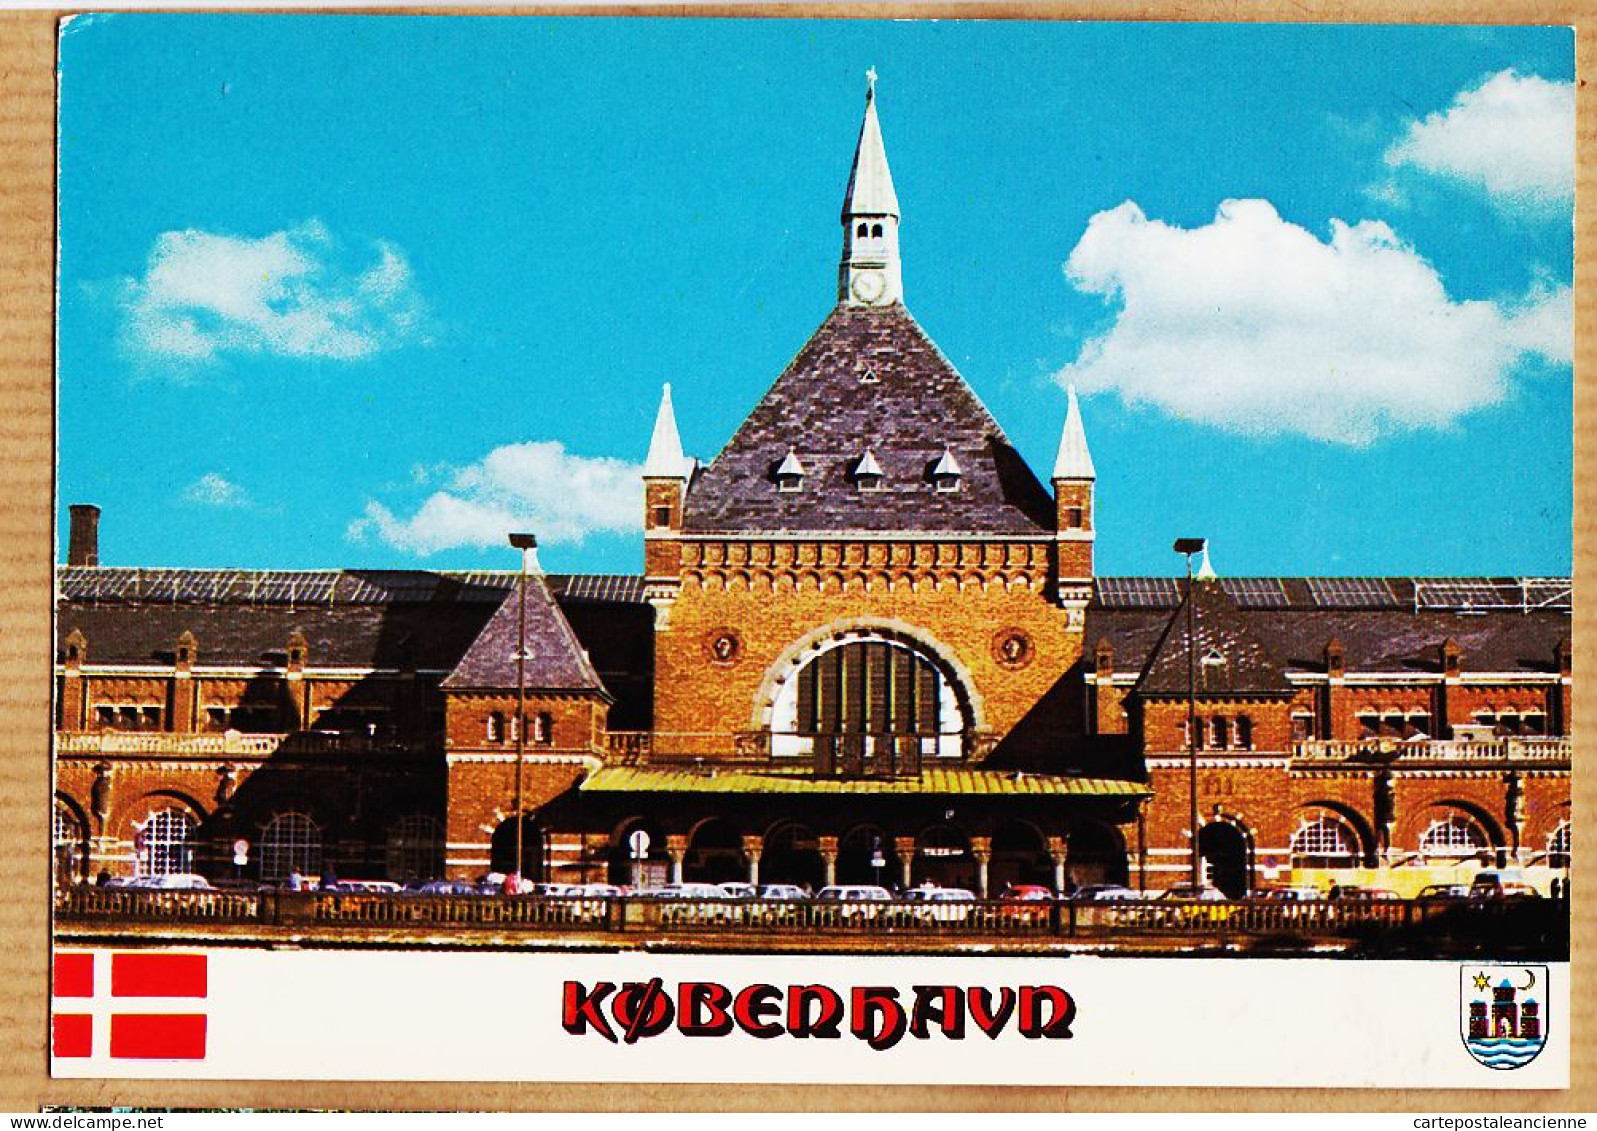 04671 / Danmark COPENHAGEN Main Station Hauptbahnhof Hovedbanegard Gare Denmark COPENHAGUE 1970s - Danemark